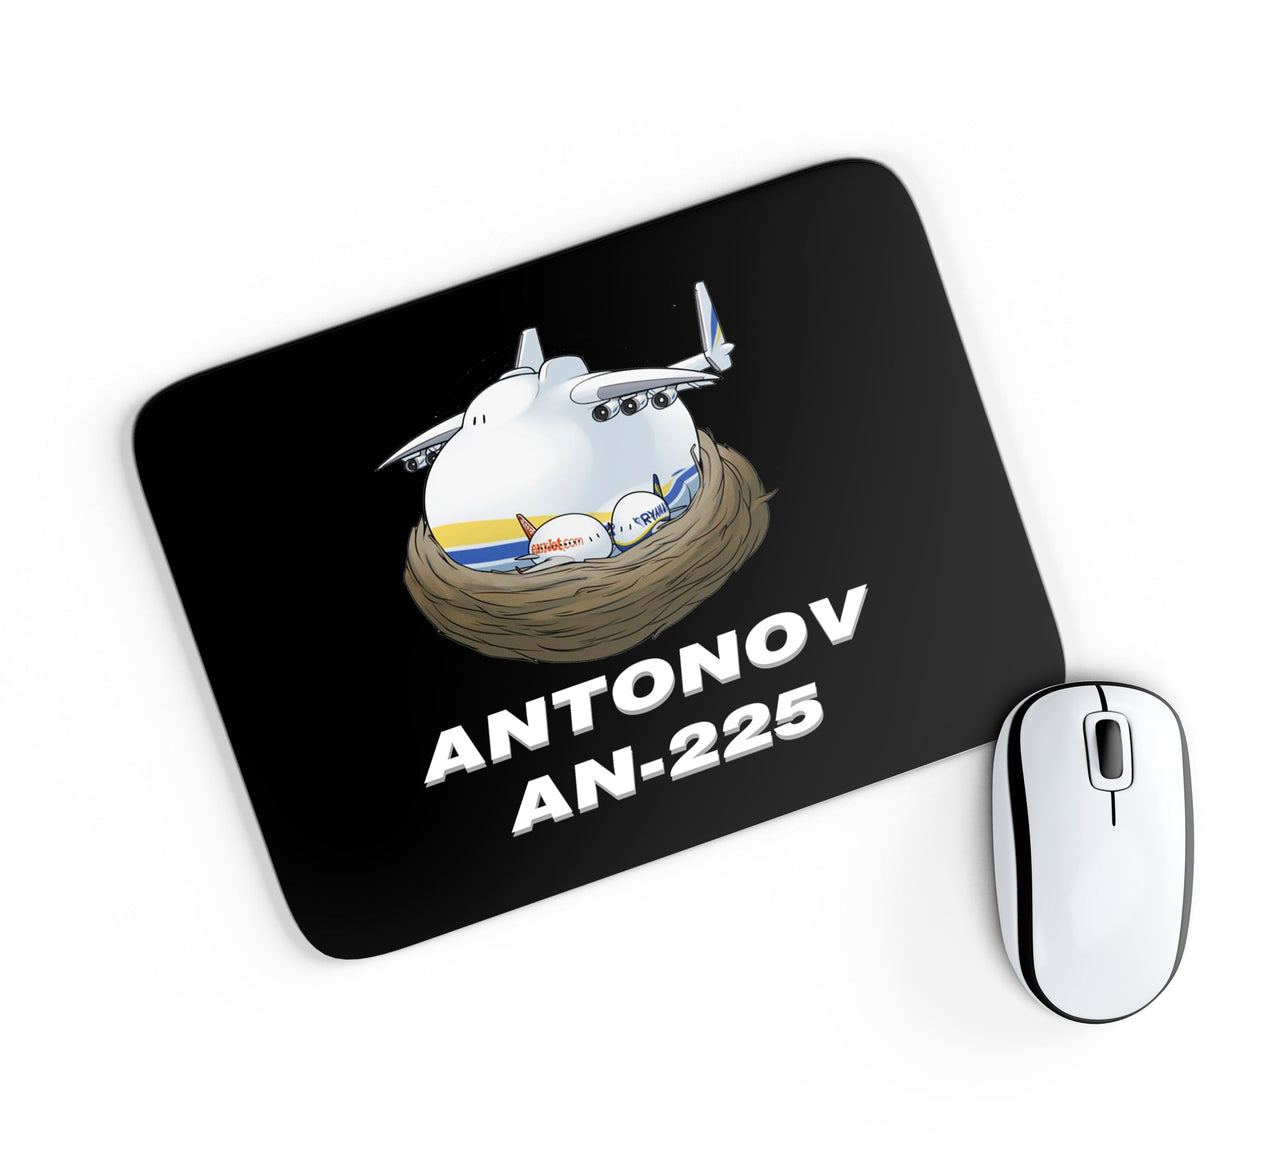 Antonov AN-225 (22) Designed Mouse Pads